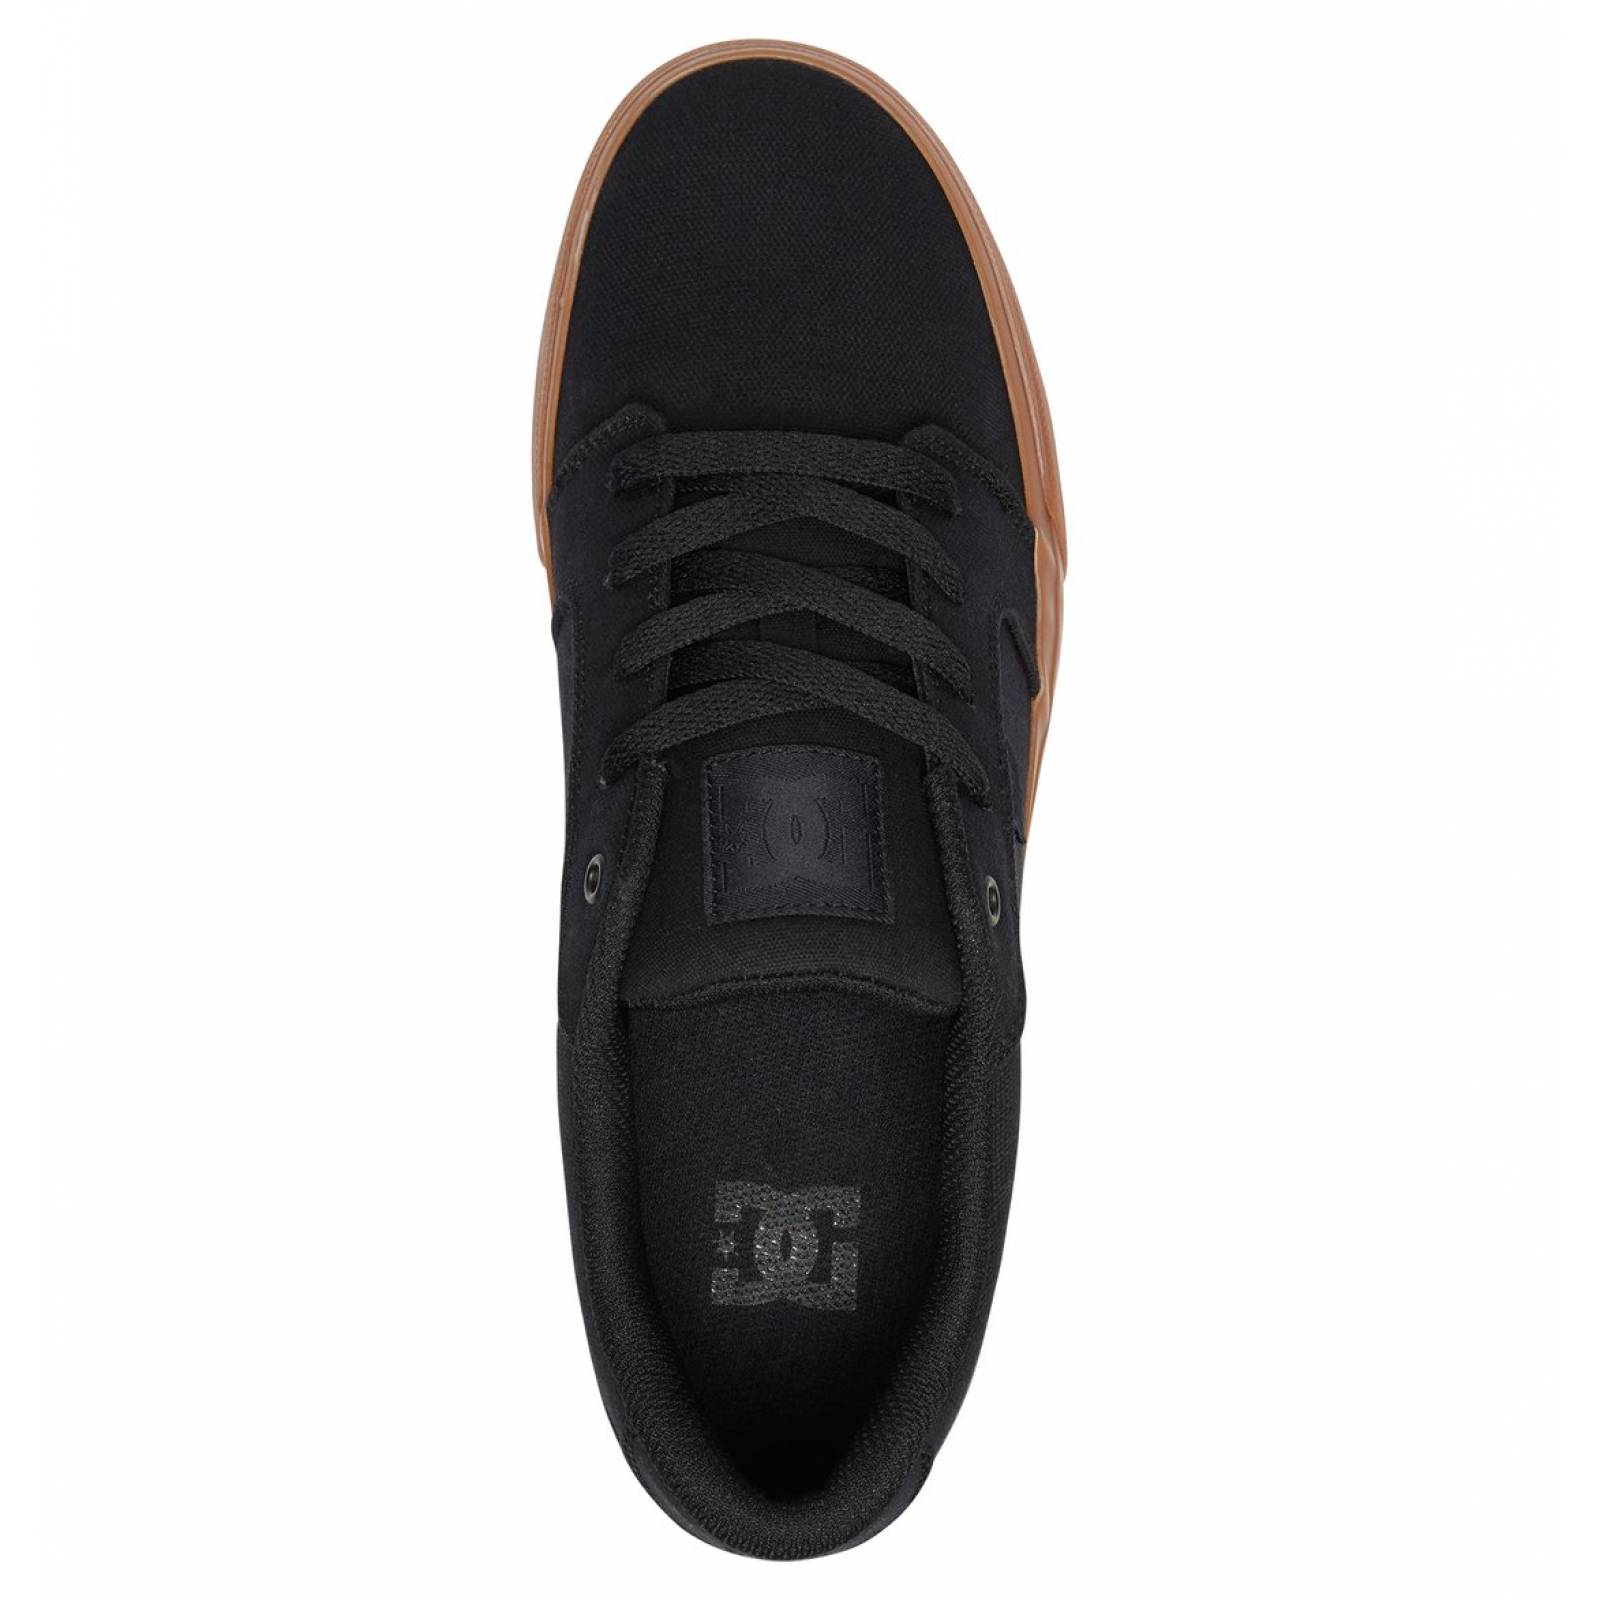 Tenis Calzado Hombre Zapato Casual ANVIL KKG Negro DC Shoes